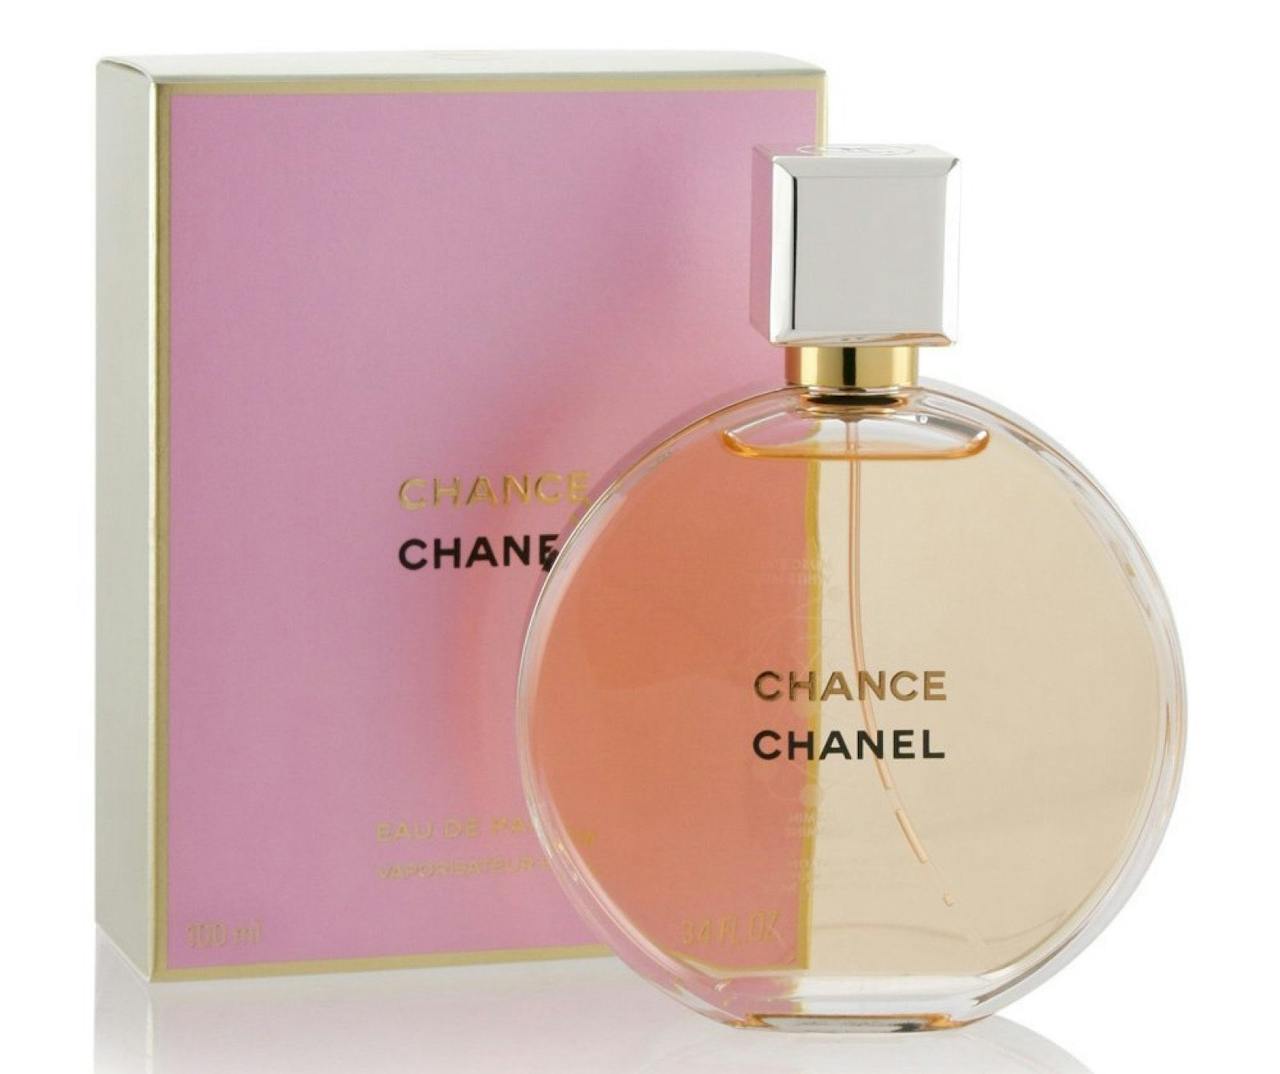 El perfume Chance de la firma francesa Chanel